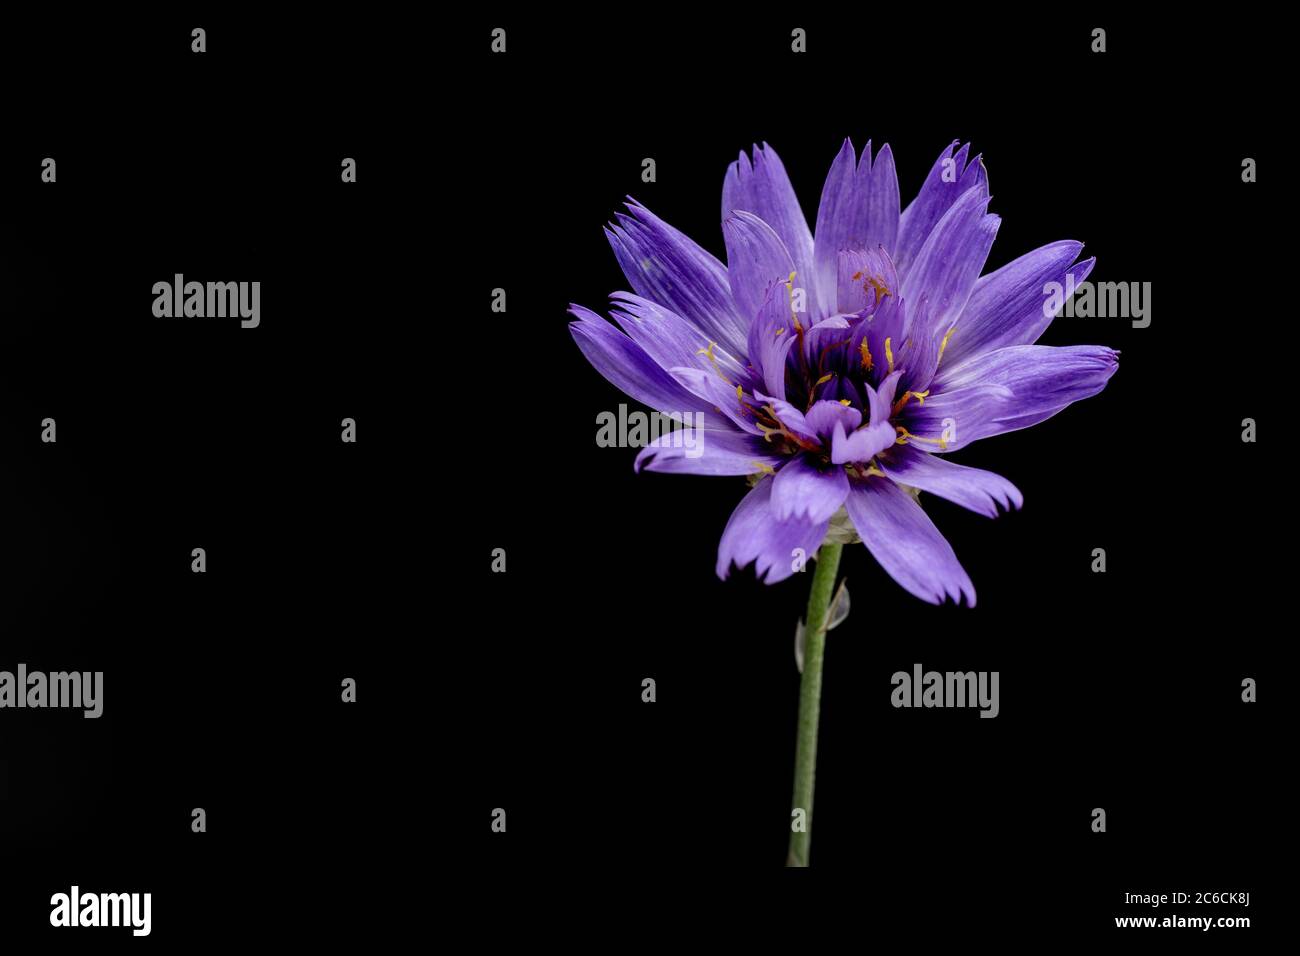 Cupid's Dart, Catananche caerulea Flower on Black Background Stock Photo